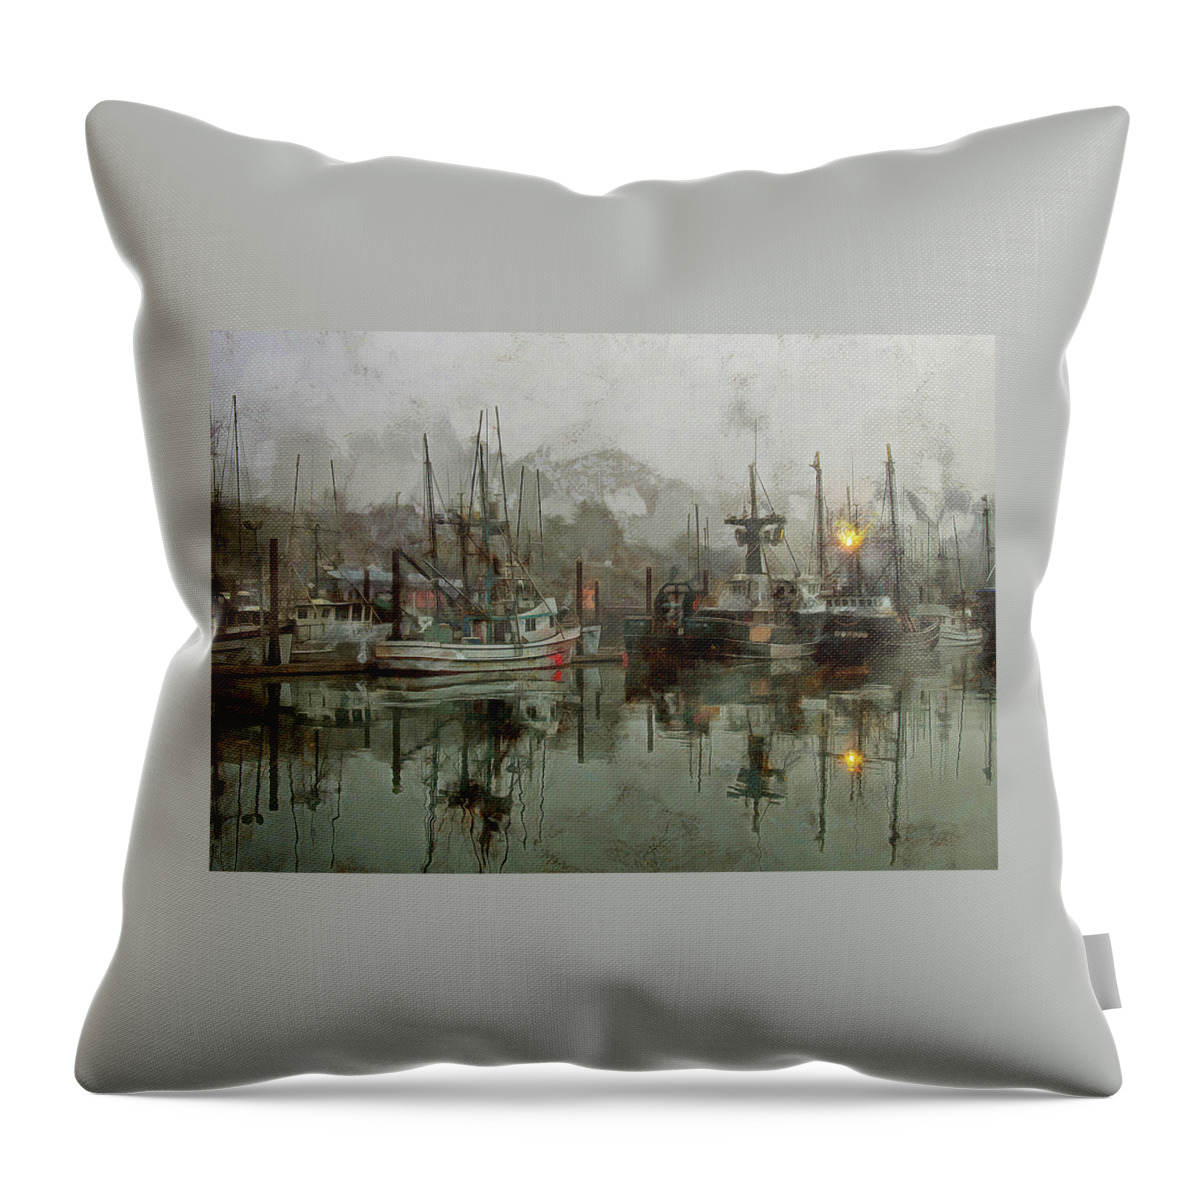 Newport Throw Pillow featuring the photograph Fishing Fleet Dock Five by Thom Zehrfeld